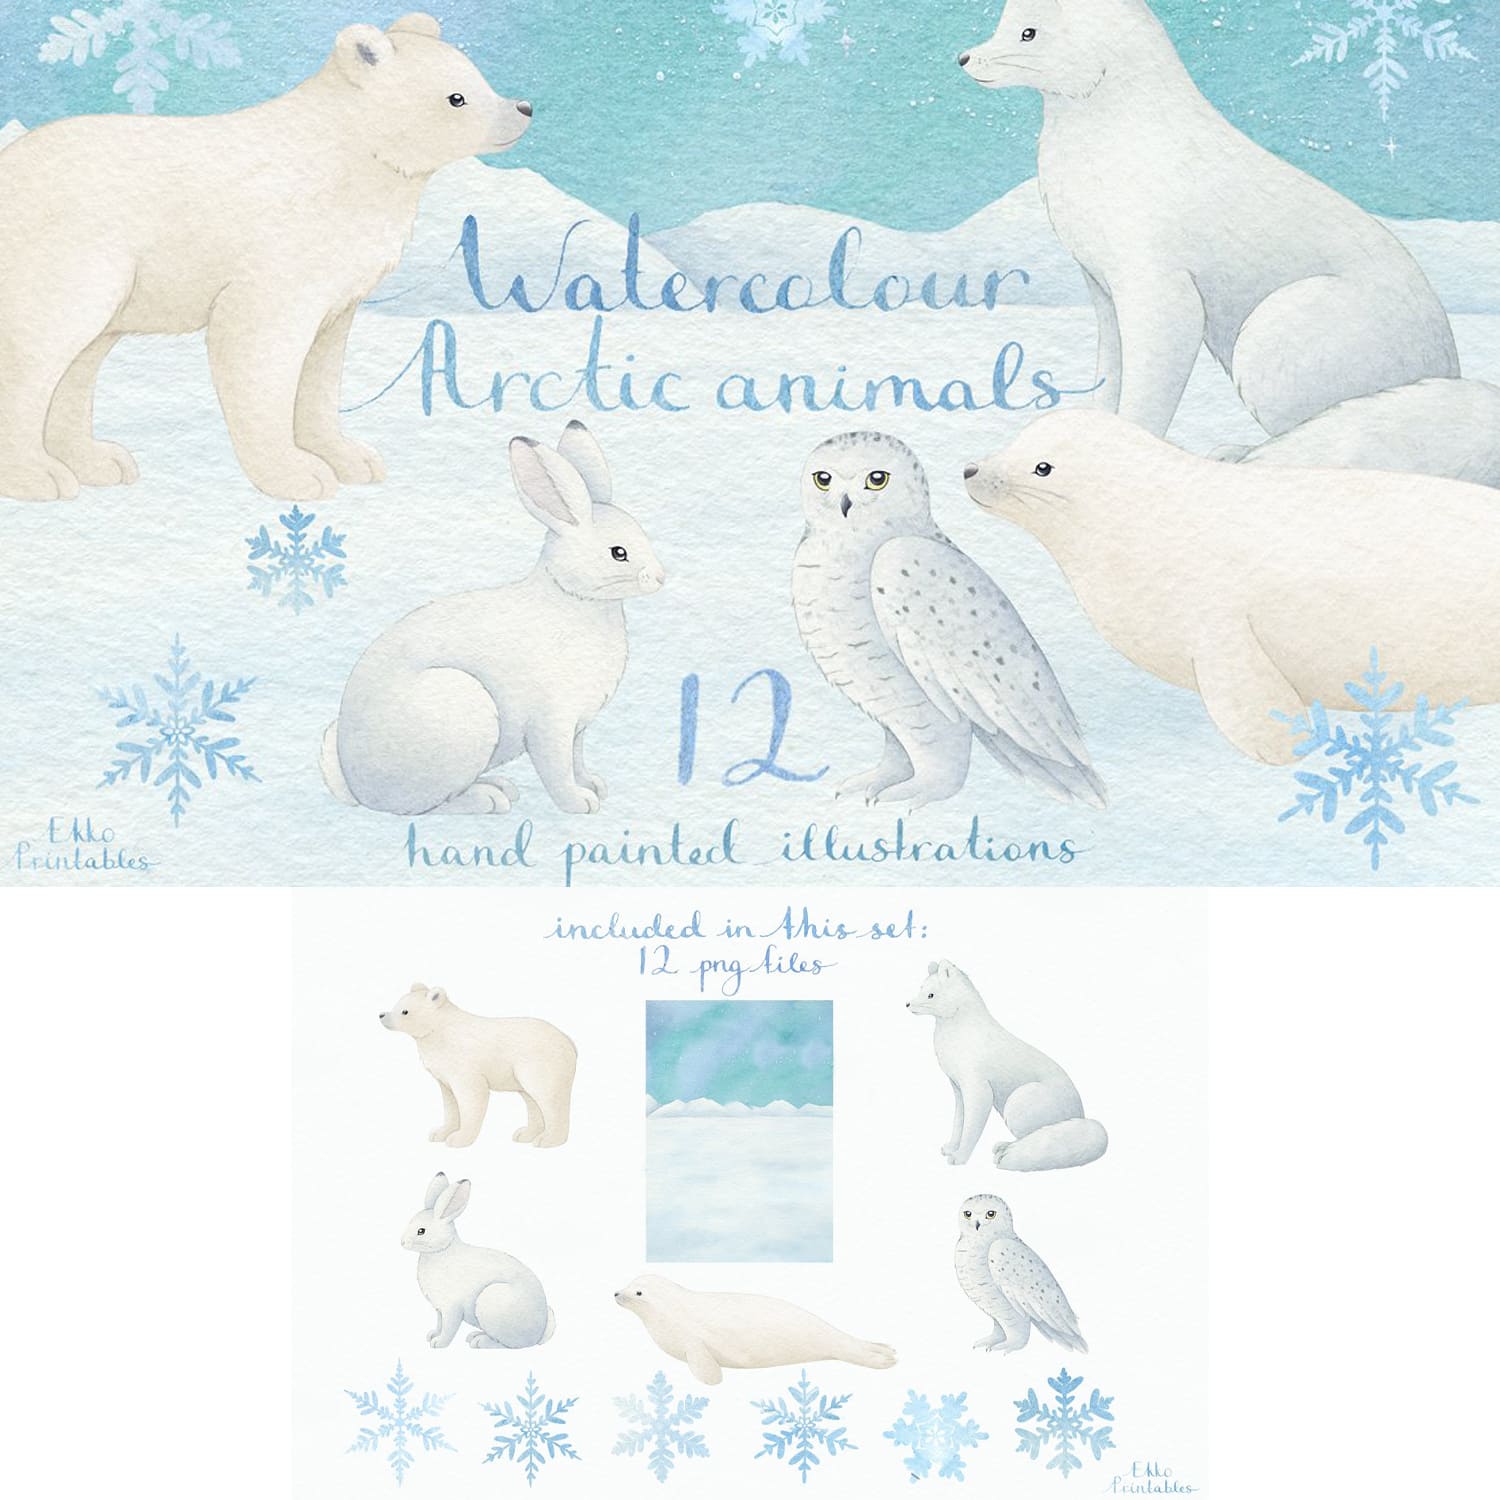 Watercolour Arctic Animals Clipart cover.